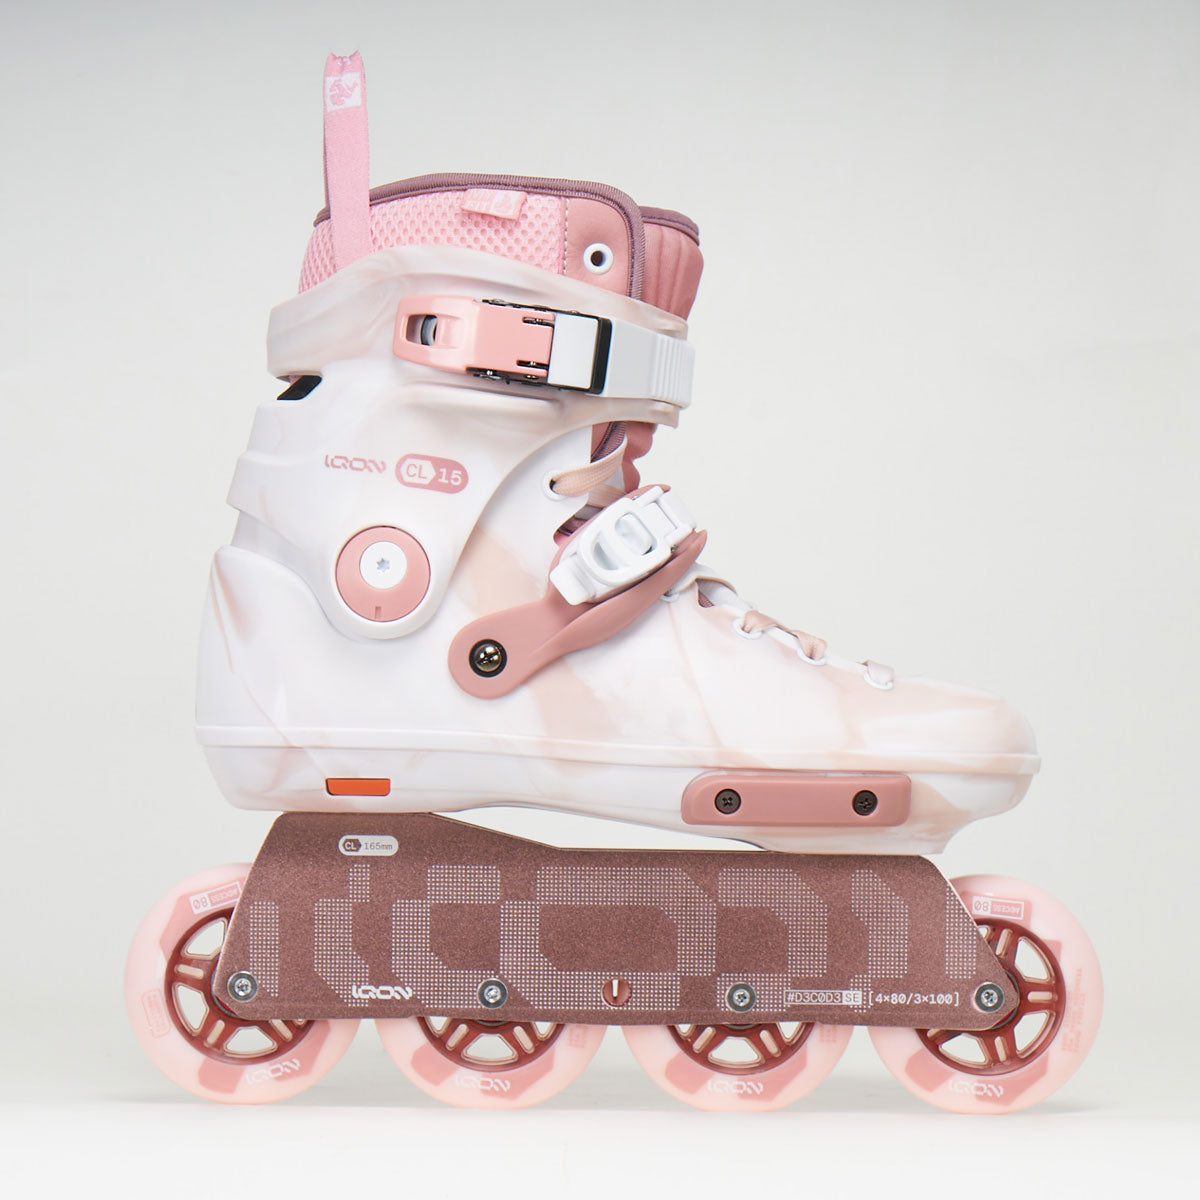 Iqon CL 15 Skates - Pink